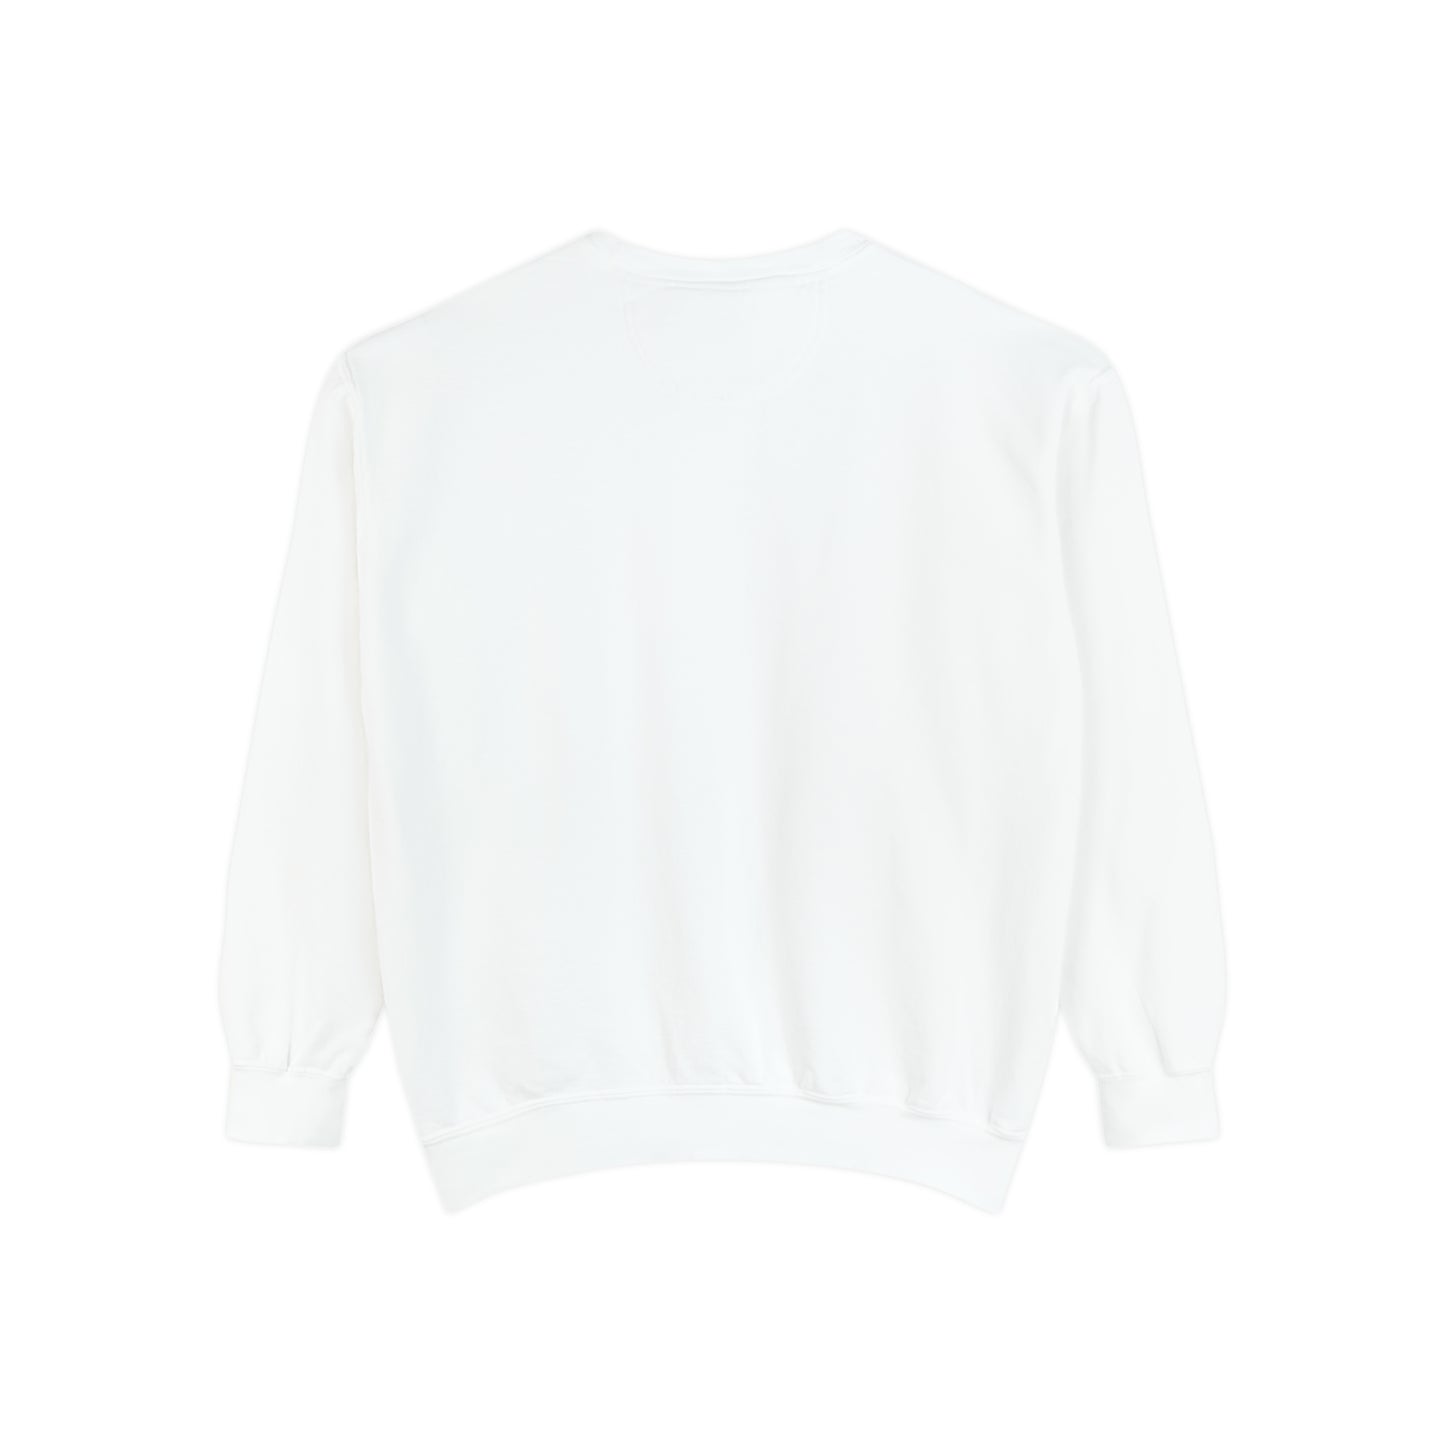 Bully-Proof Unisex Garment-Dyed Sweatshirt